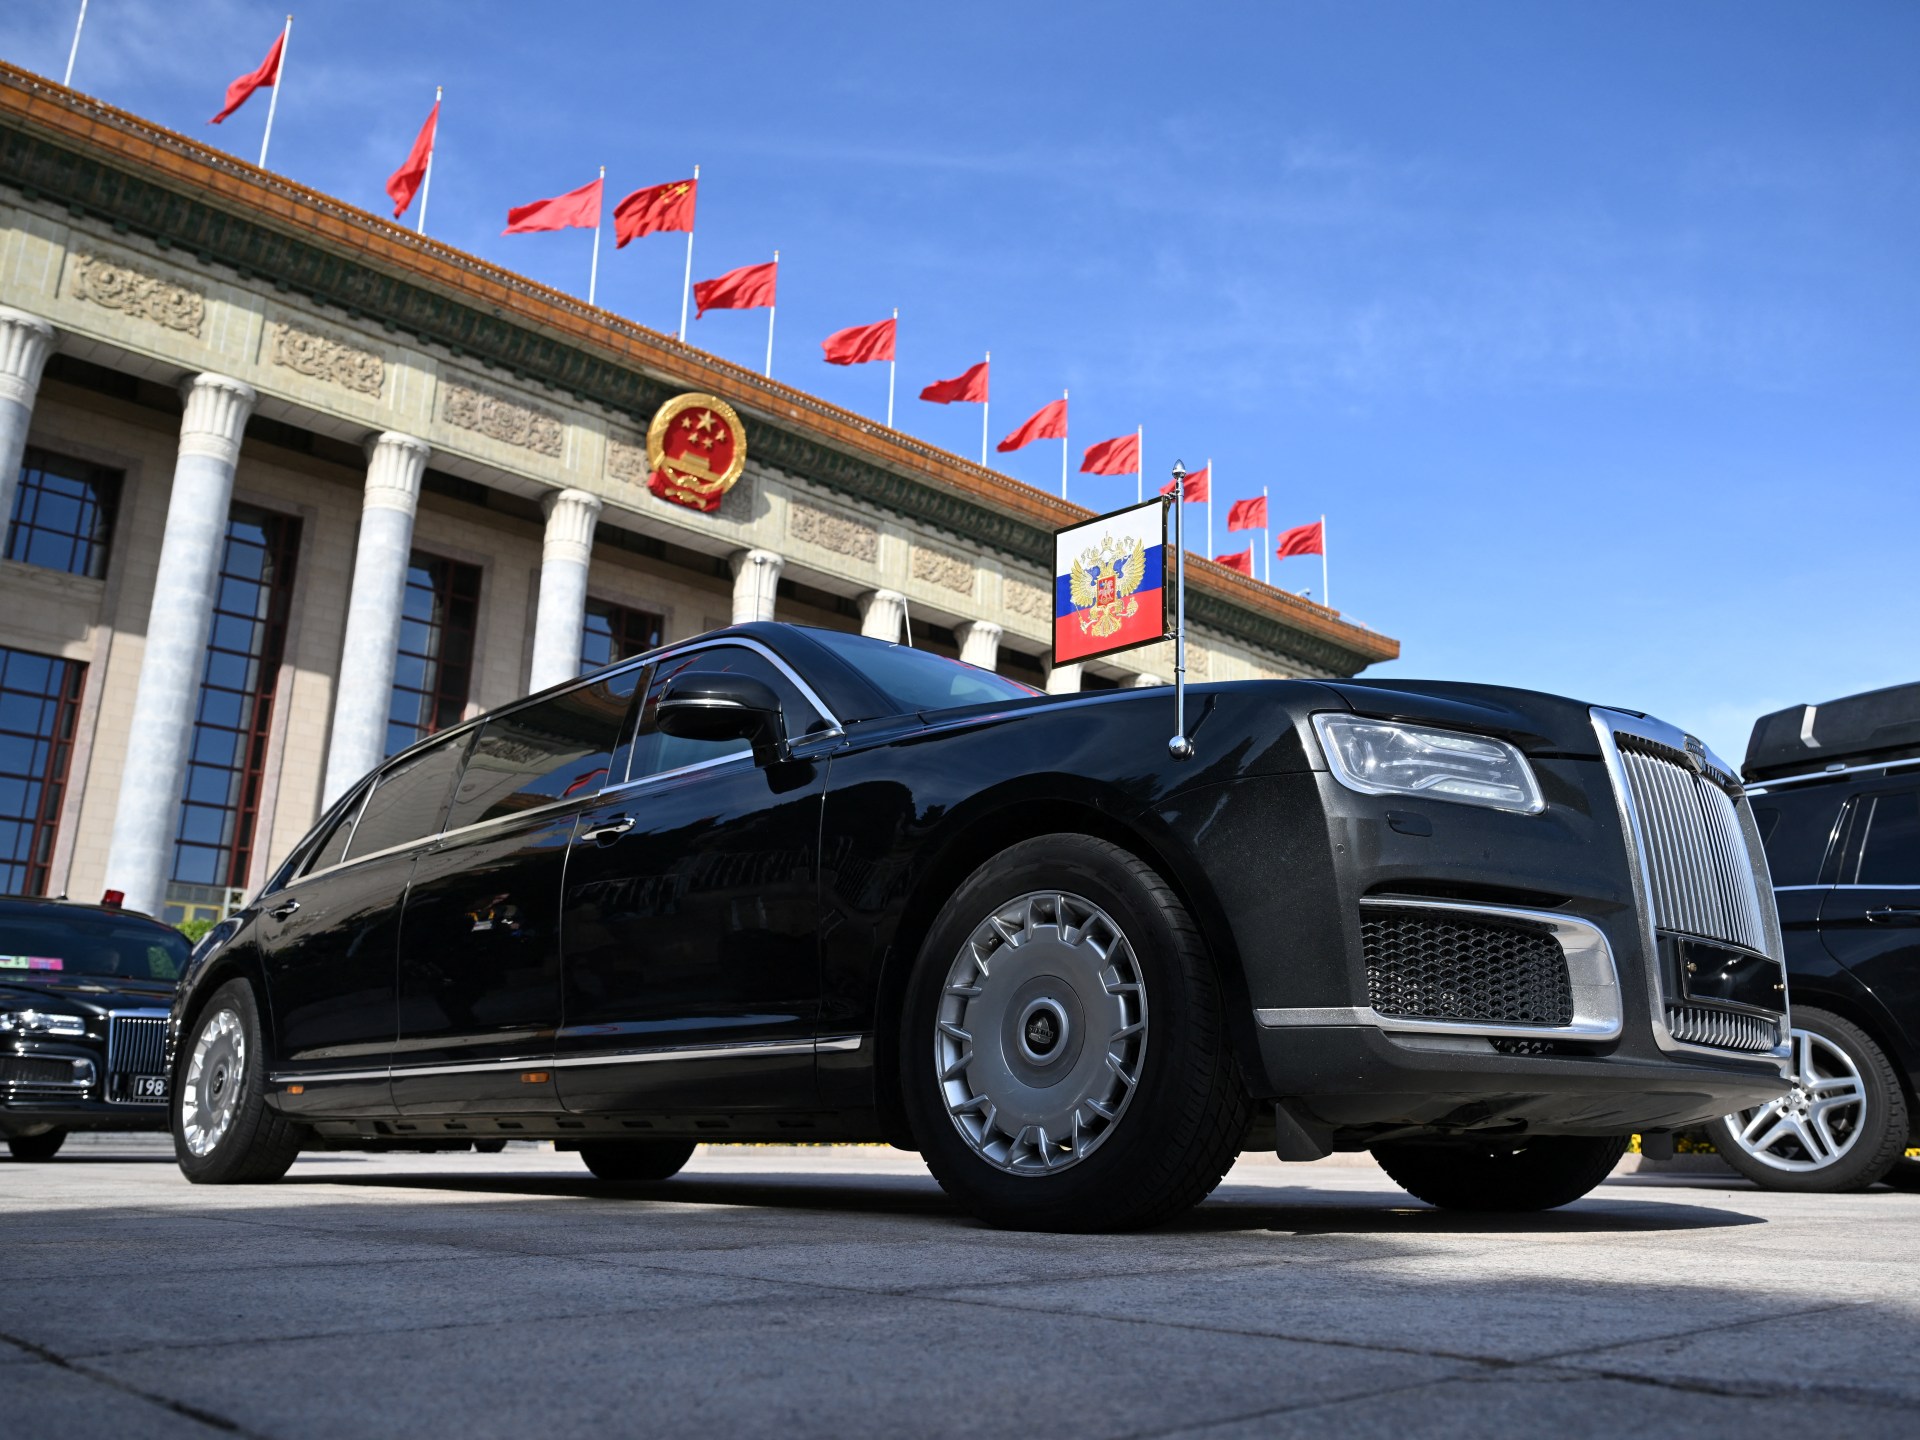 North Korean leader Kim Jong Un takes symbolic ride in Russian luxury car